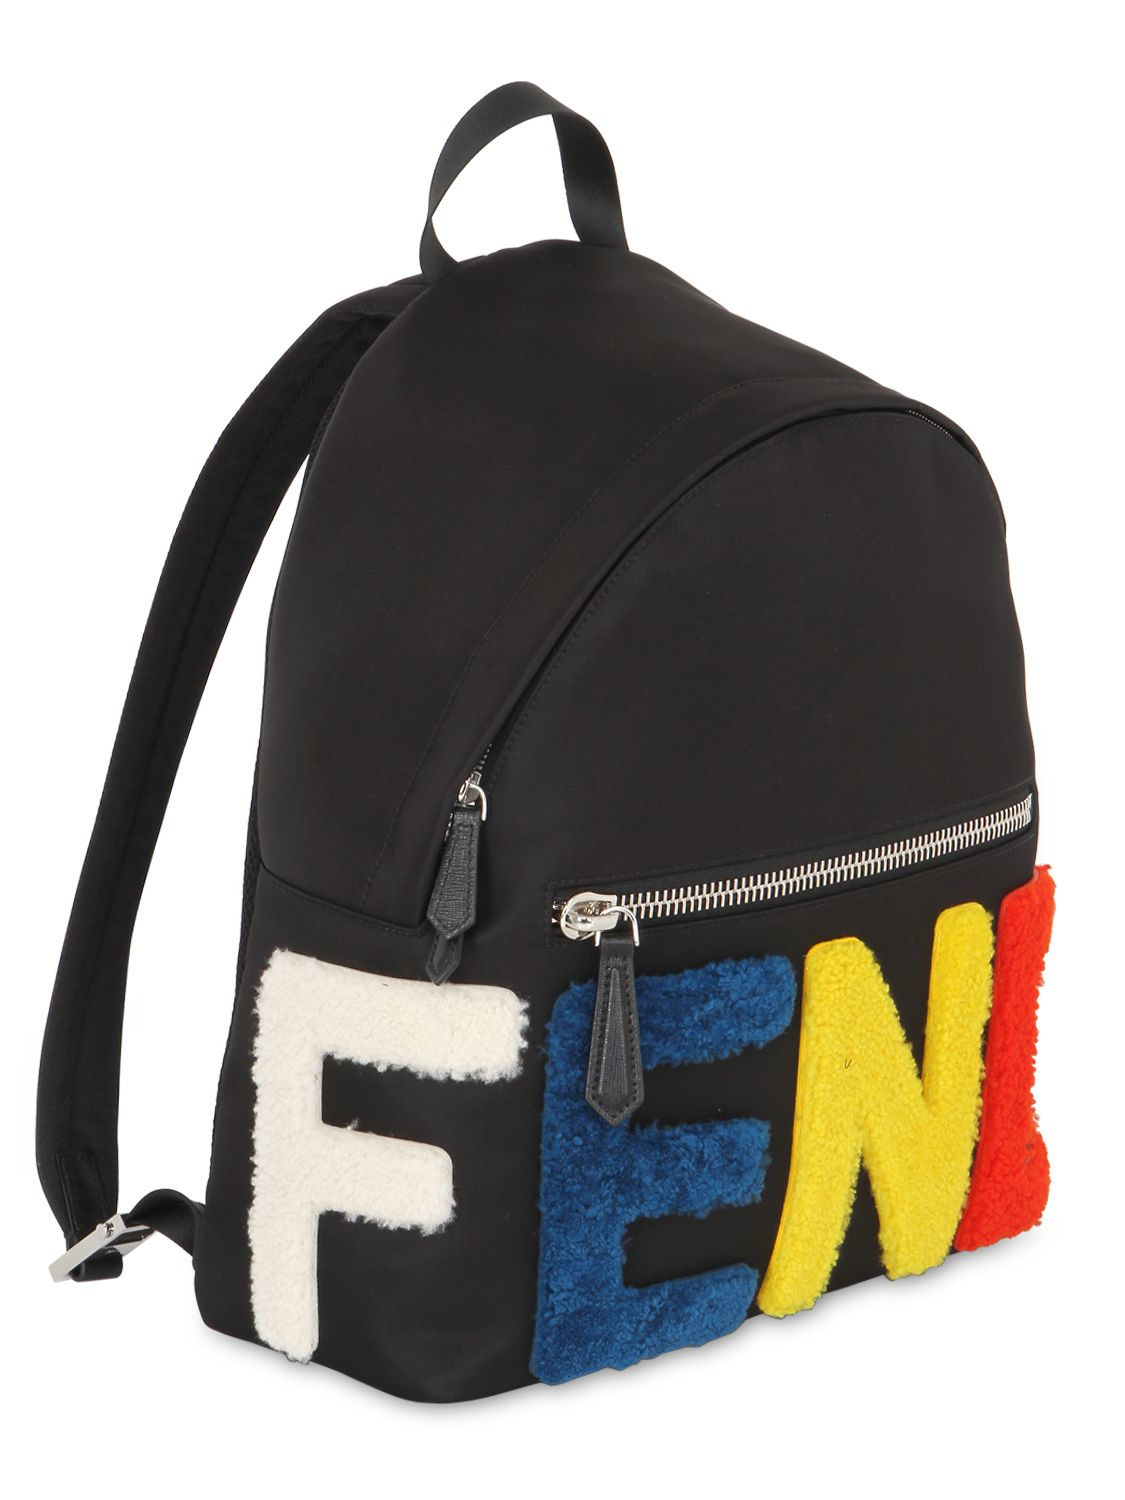 Fendi Logo Patches Nylon & Shearling Backpack in Black for Men - Lyst